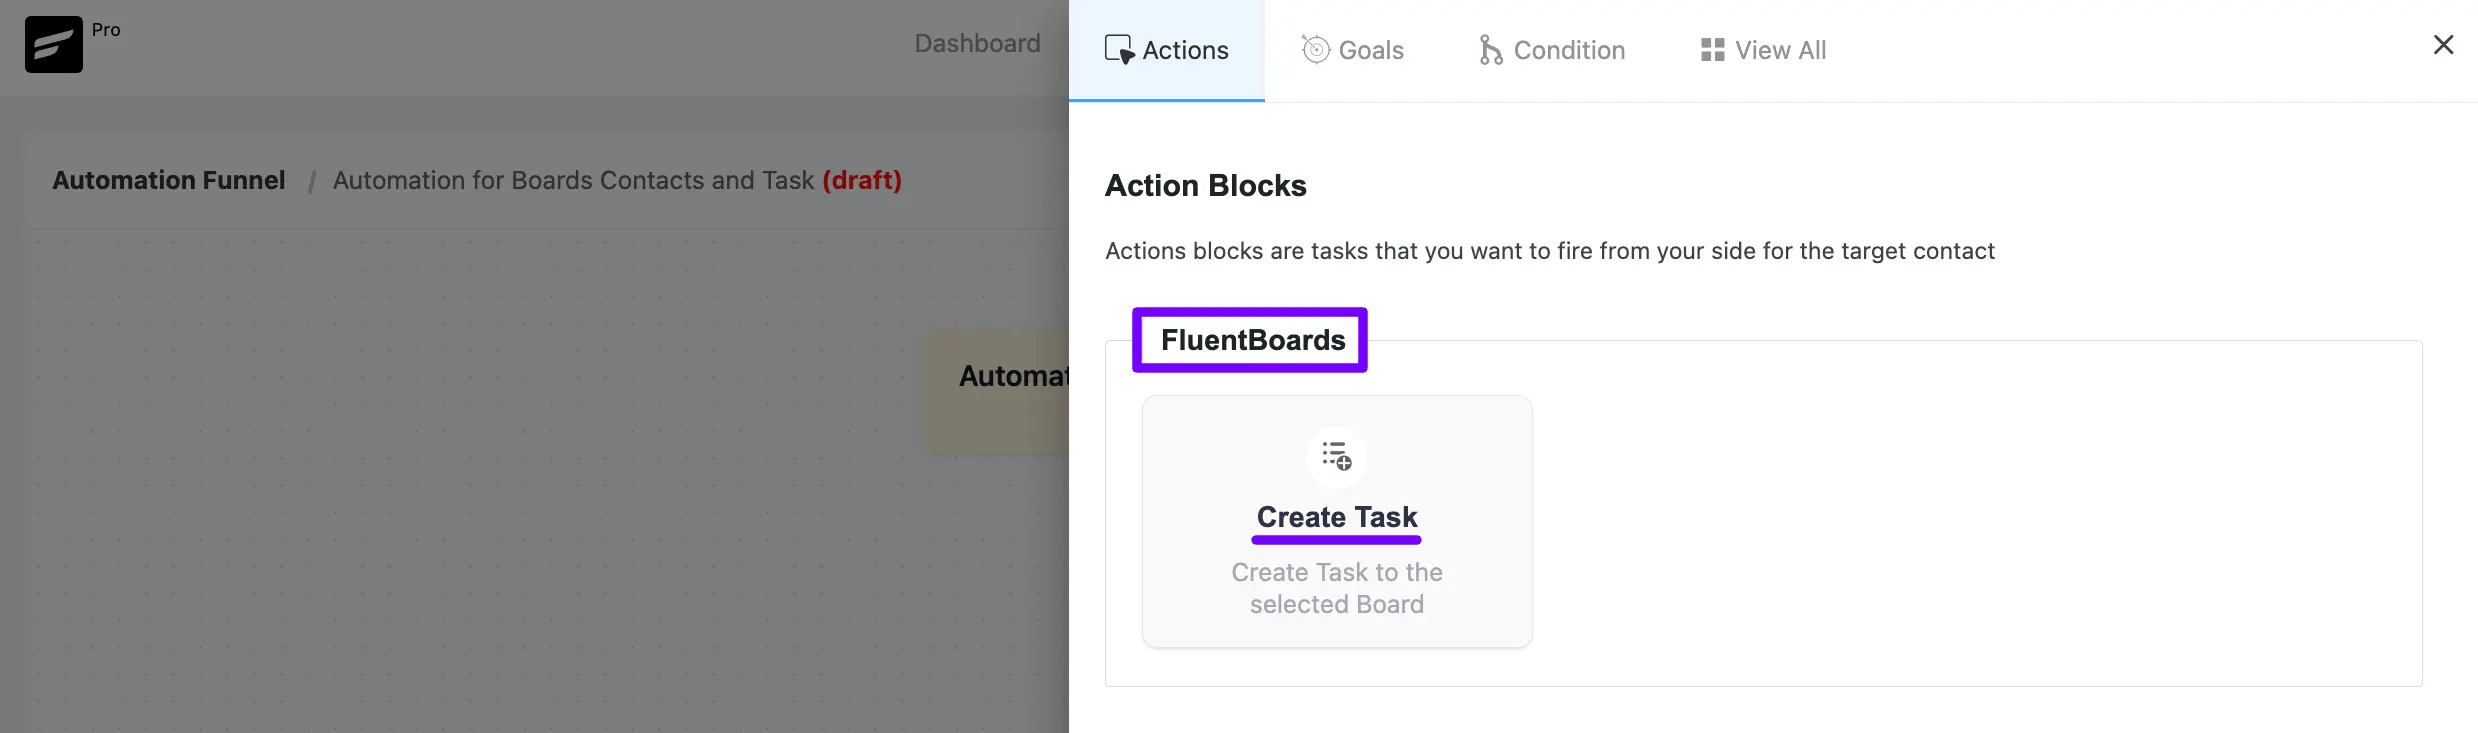 FluentBoards Task Create Action 